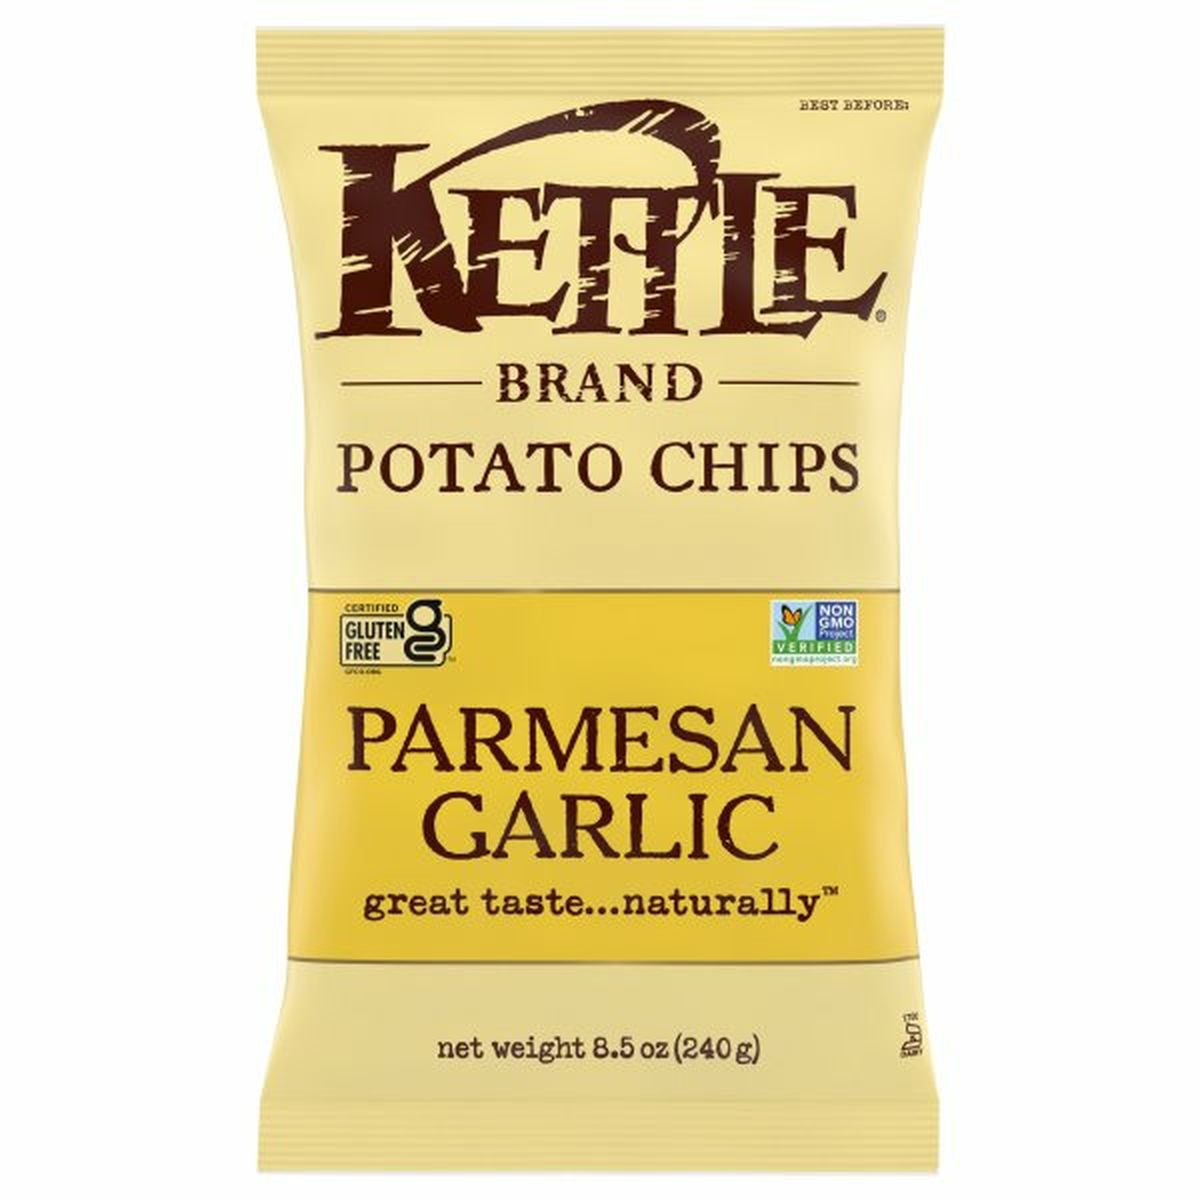 Calories in Kettle Brands Potato Chips, Parmesan Garlic